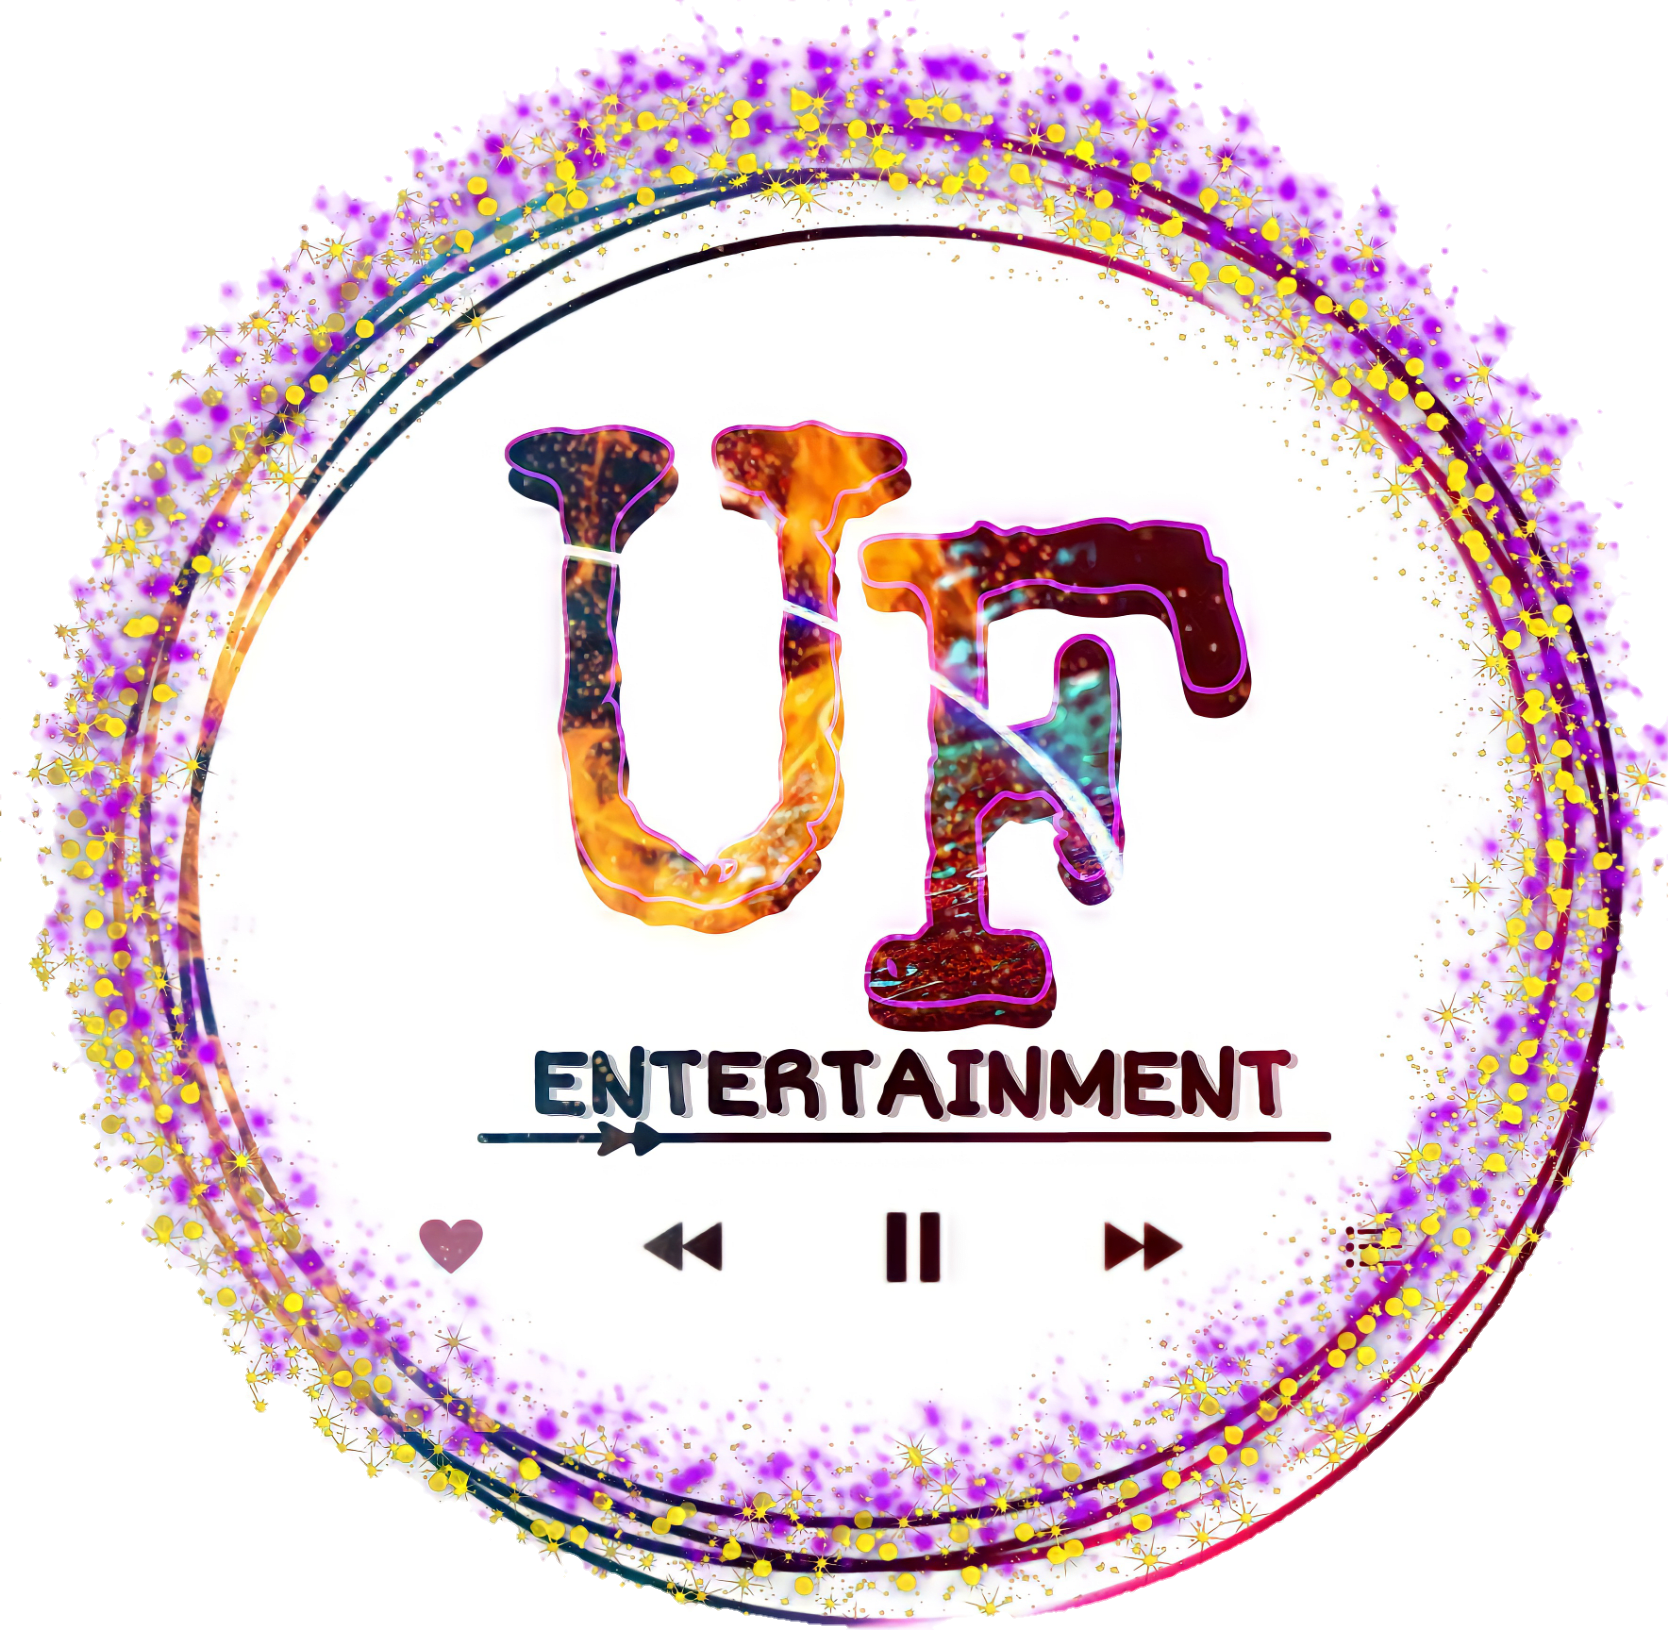 Upadhayay Films & Entertainment